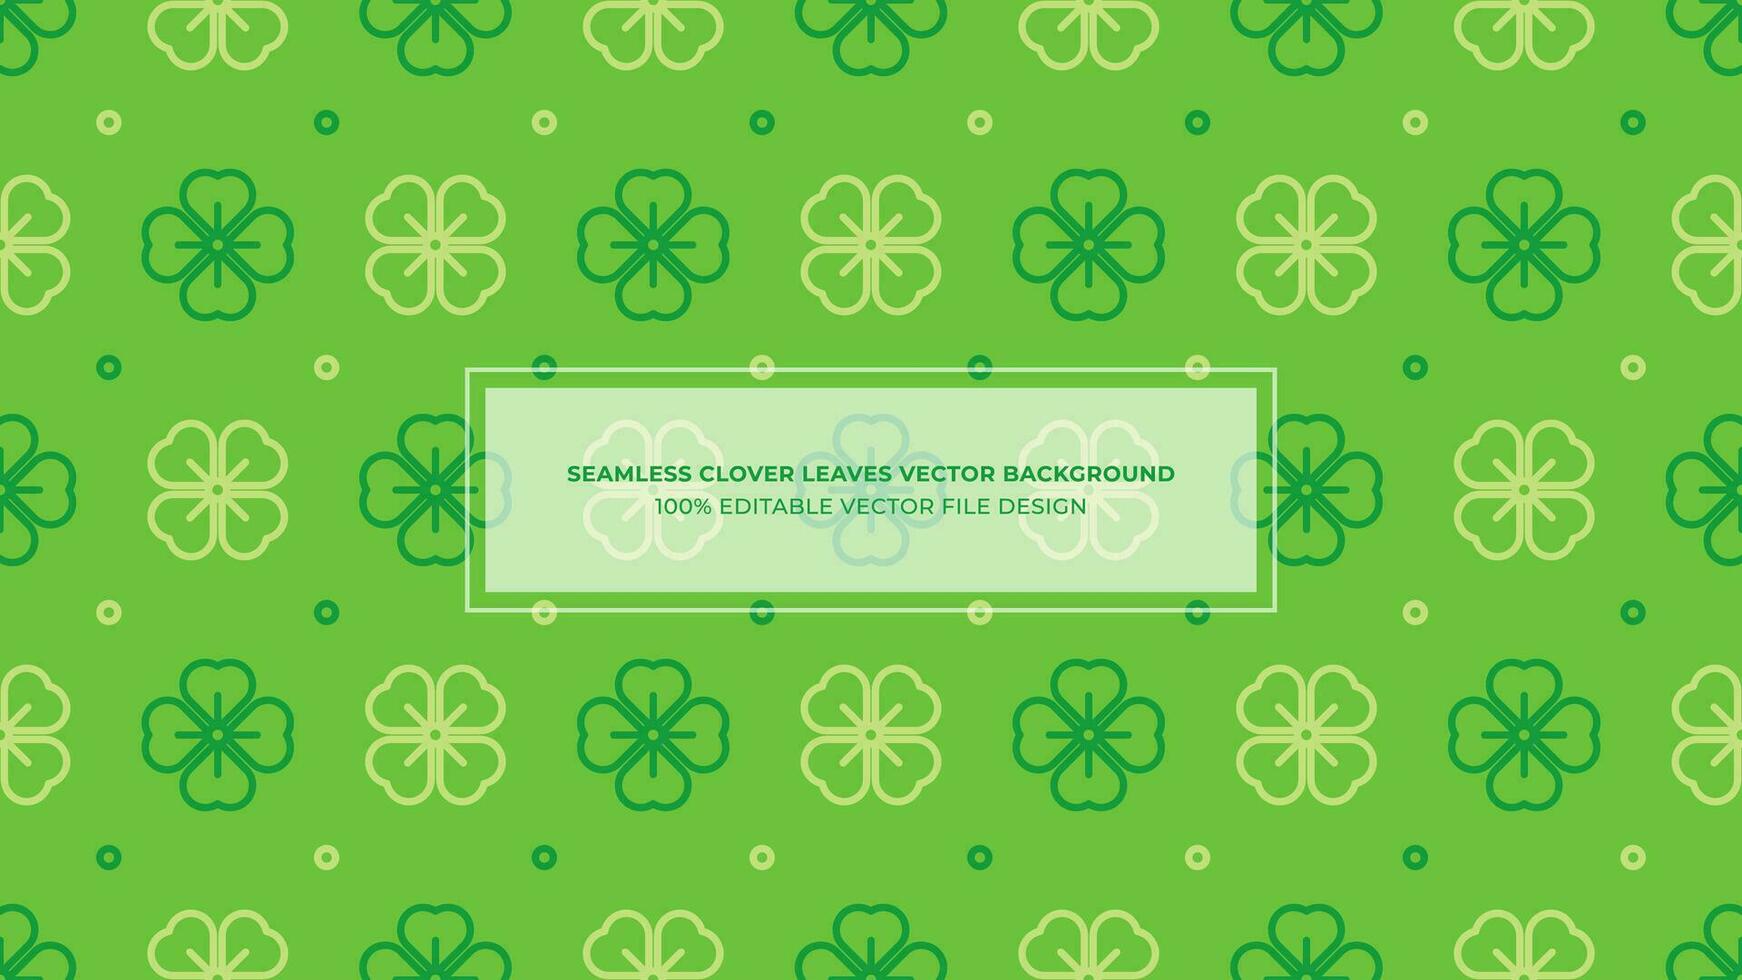 Lima verde vector antecedentes diseño decorado con un sin costura modelo de sencillo trébol hojas